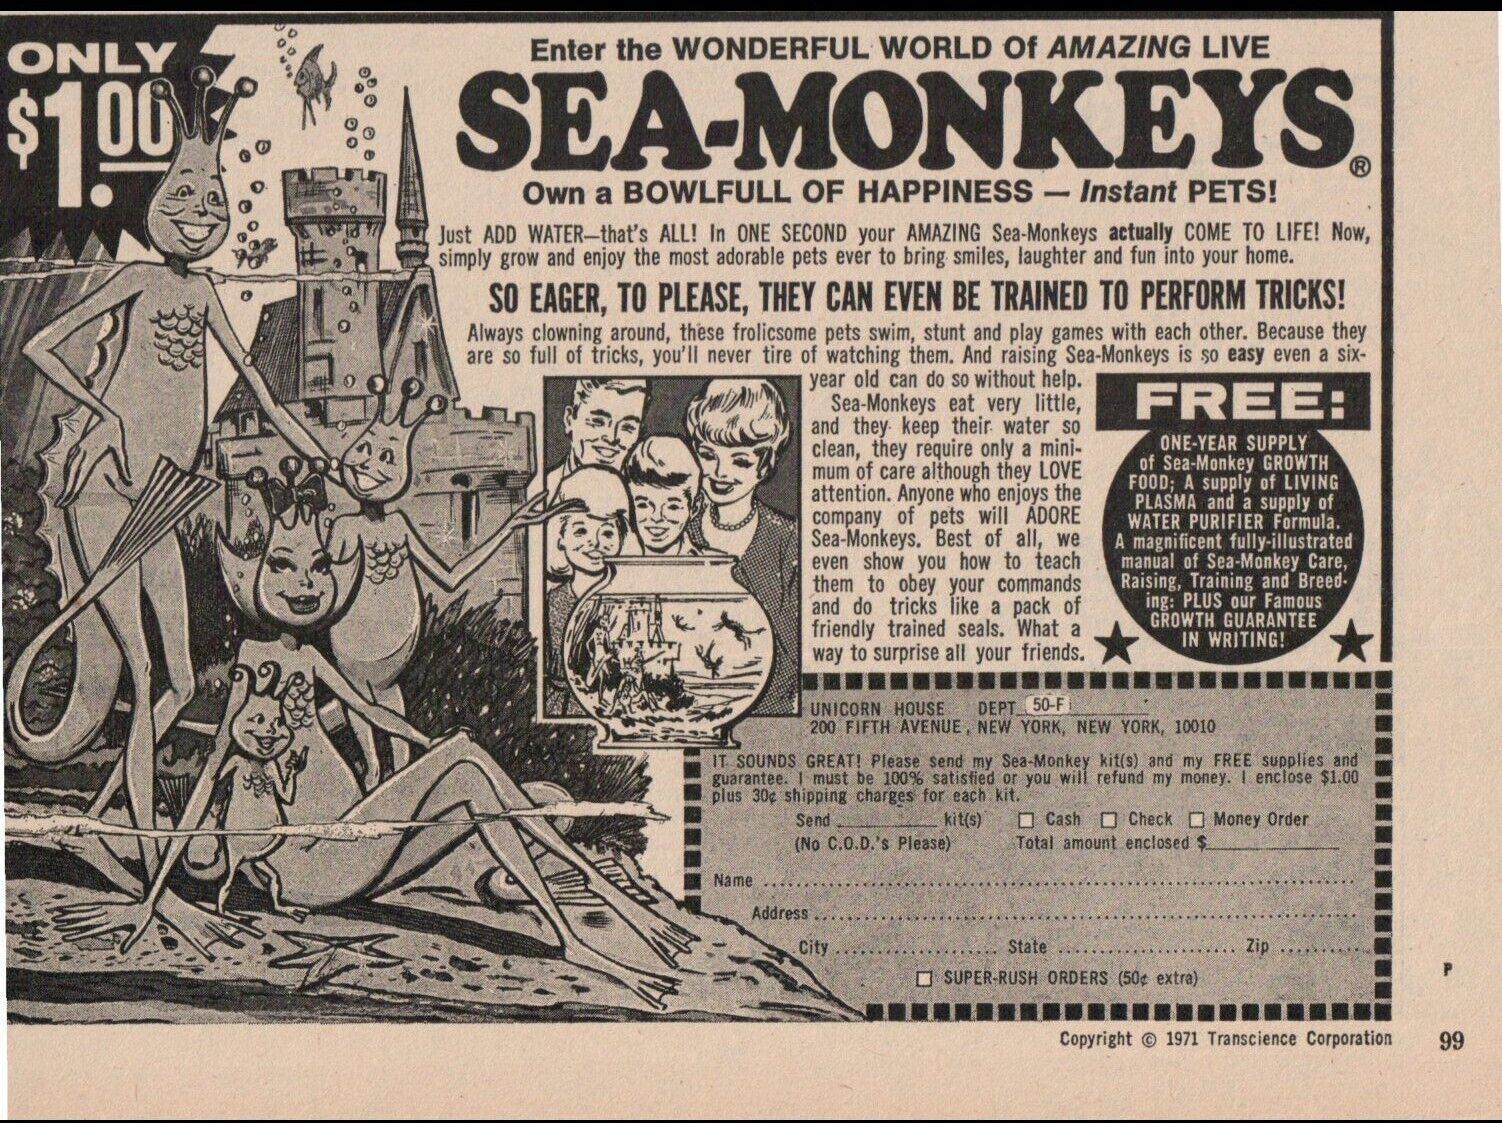 1971 Sea-Monkeys Bowlfull of Happiness Mail-Order Magazine Print Ad 